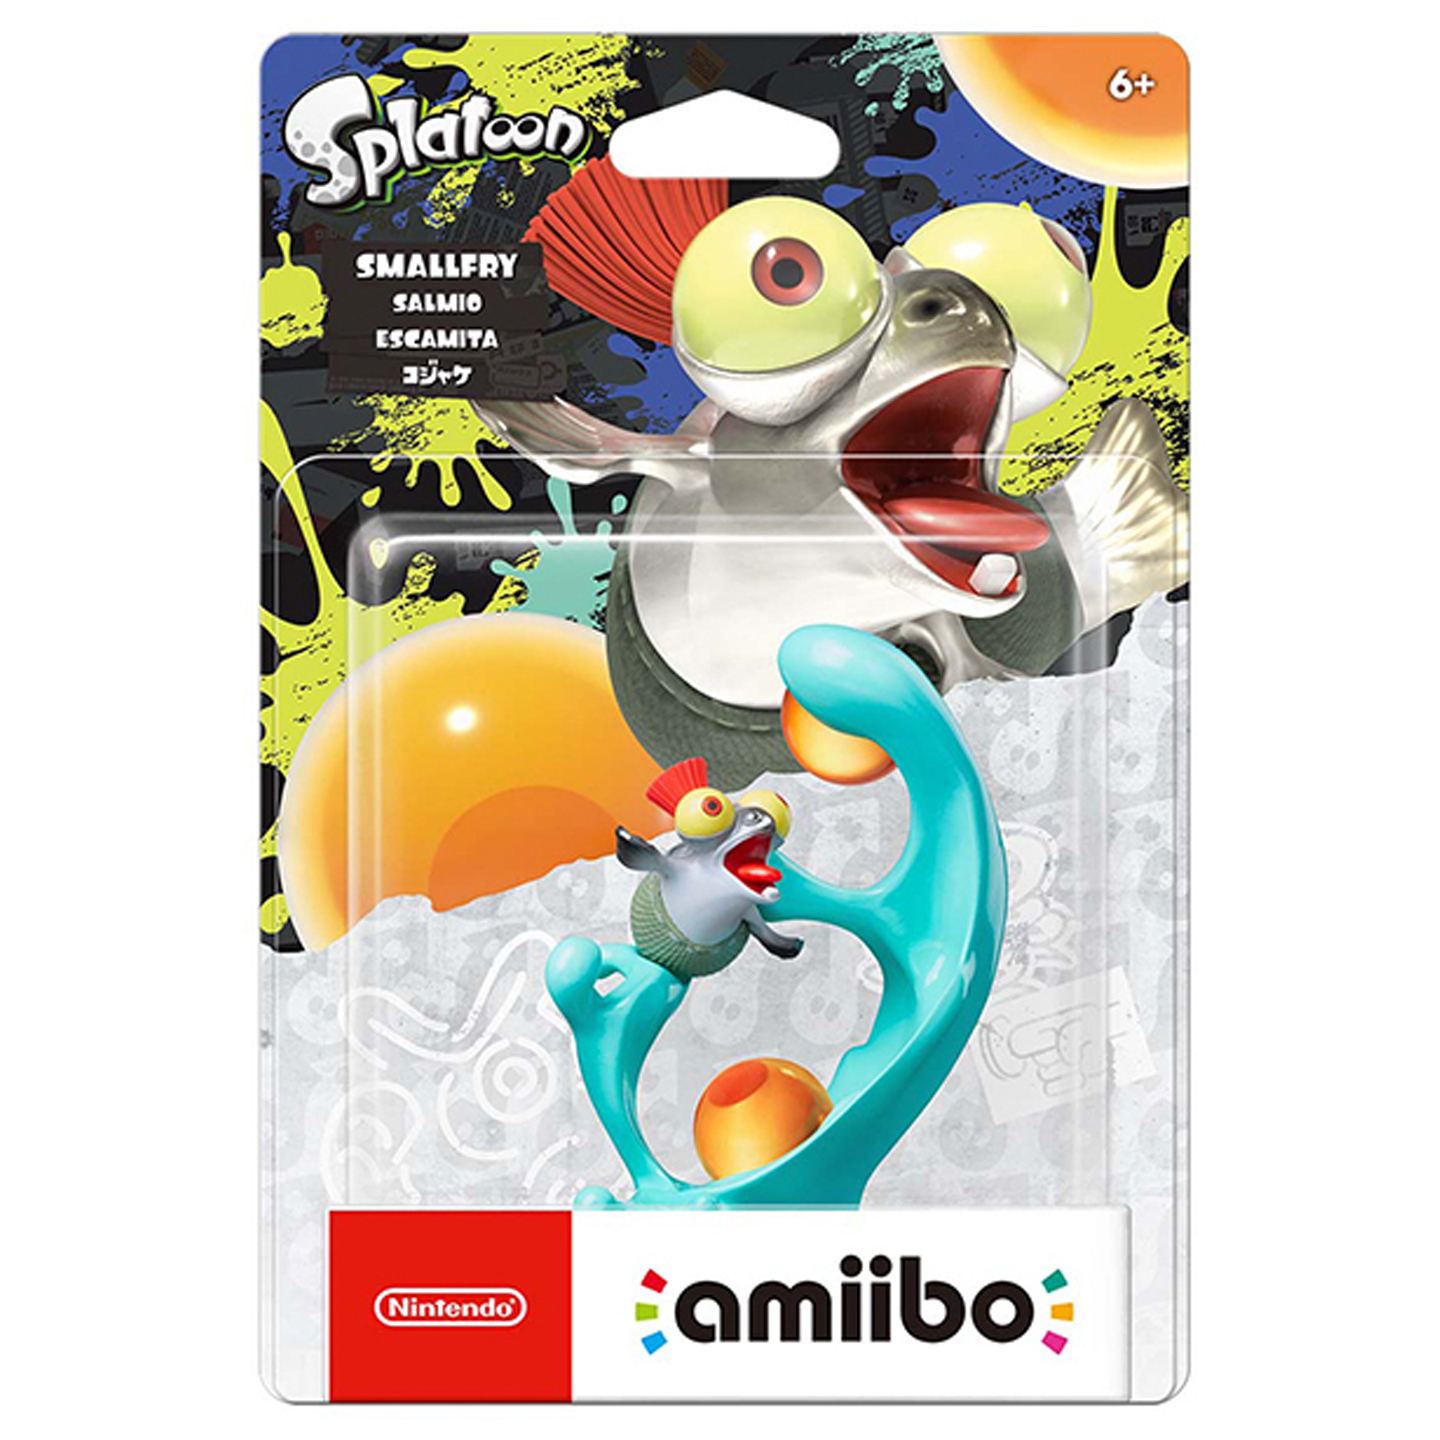 amiibo Splatoon 3 Series Figure (Smallfry) for Wii U, New 3DS, New